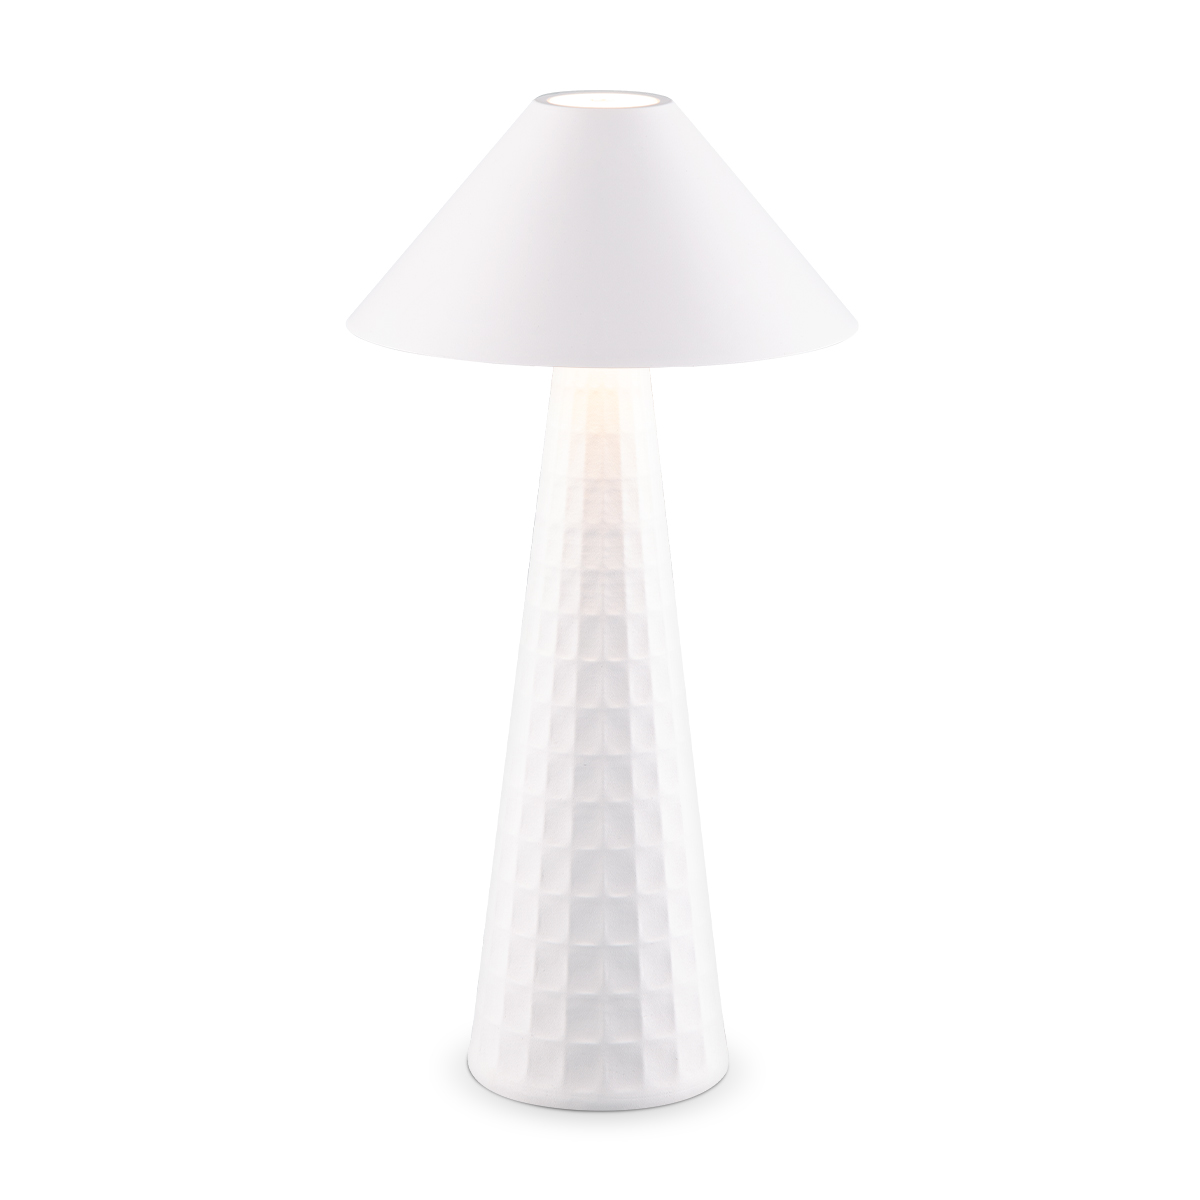 Tangla lighting - TLT7645-01WT - LED table lamp - rechargeable plastic and metal - white - mushroom